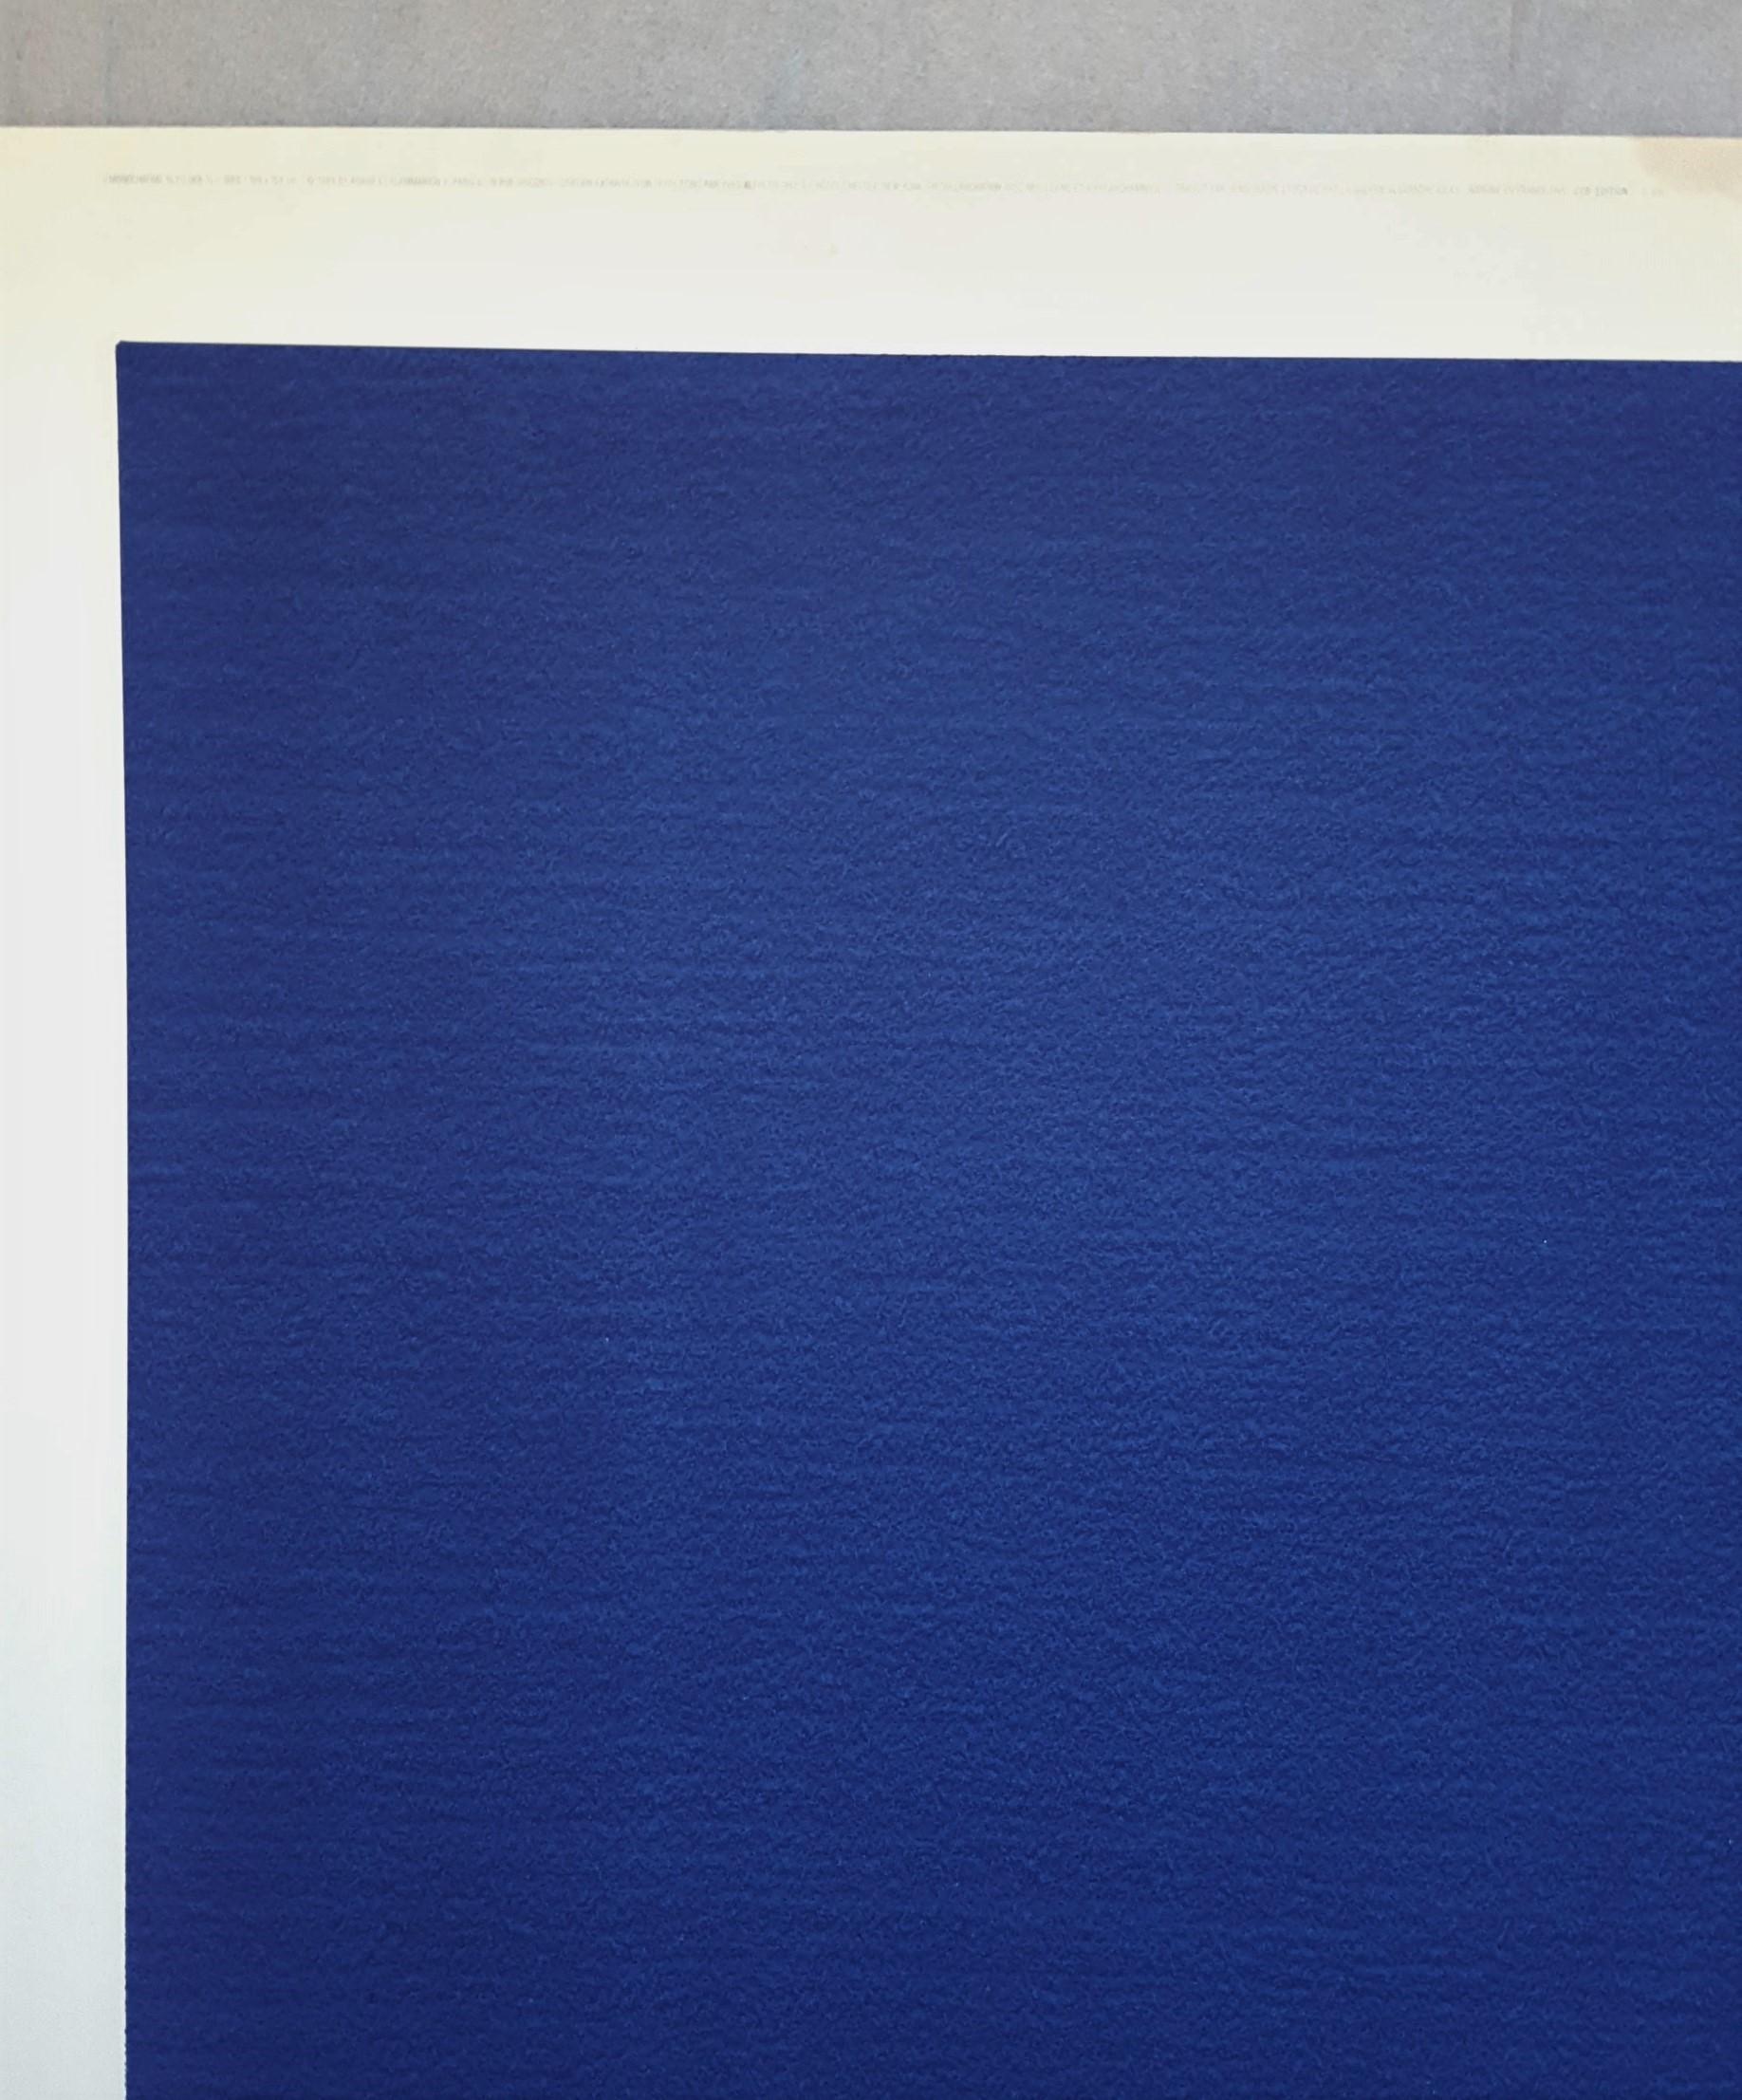 Monochrome Bleu (IKB 3) - Minimalist Print by Yves Klein